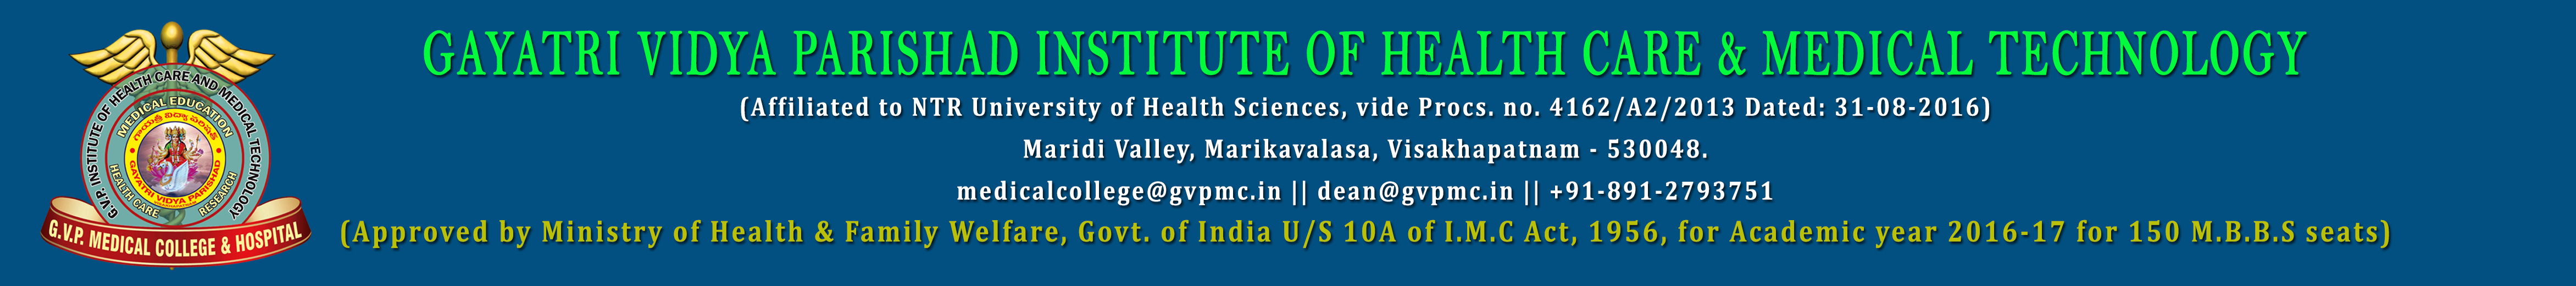 Gayatri Vidya Parishad Institute of Health Care and Medical Technology, 